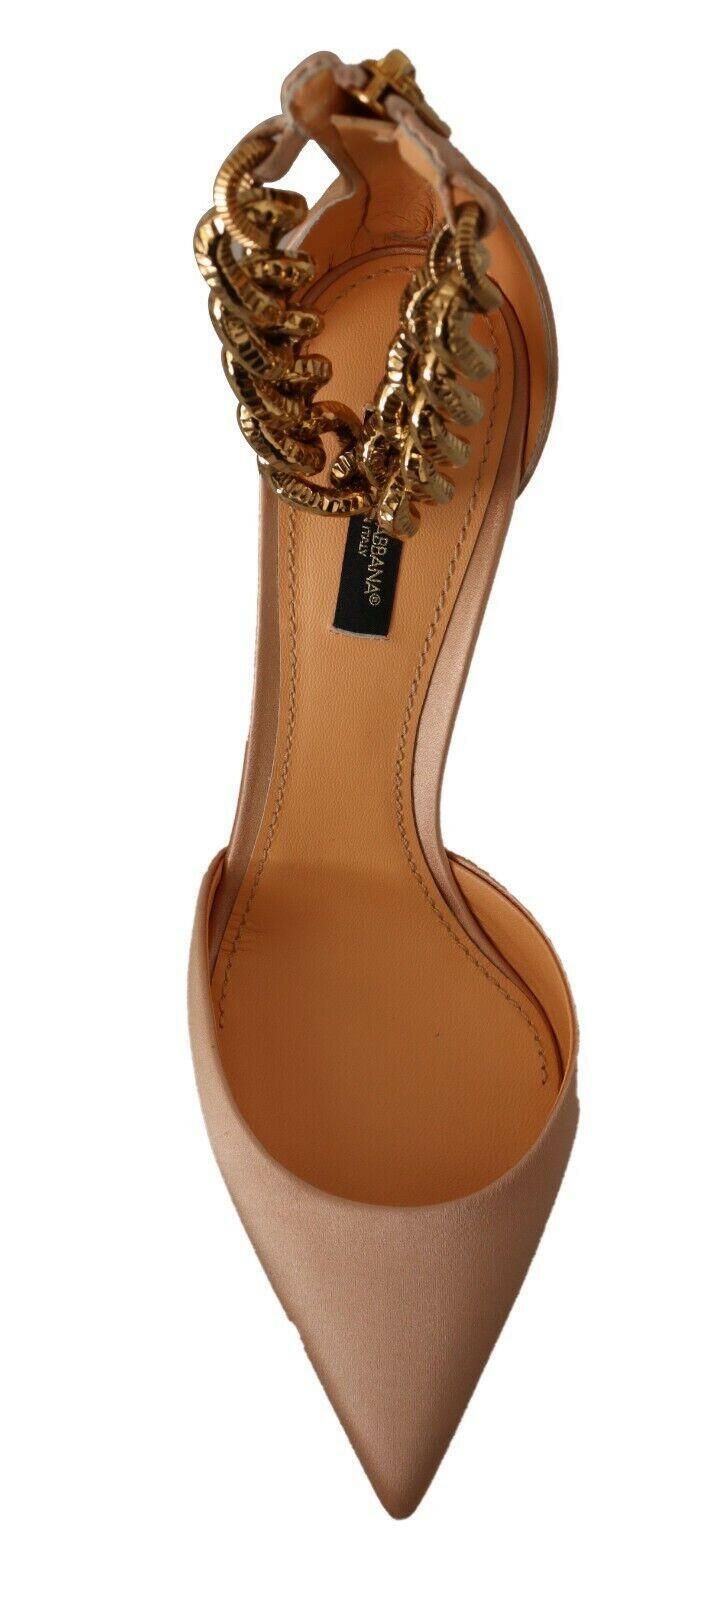 Dolce & Gabbana Beige Ankle Chain Strap High Heels Pumps Shoes - GENUINE AUTHENTIC BRAND LLC  